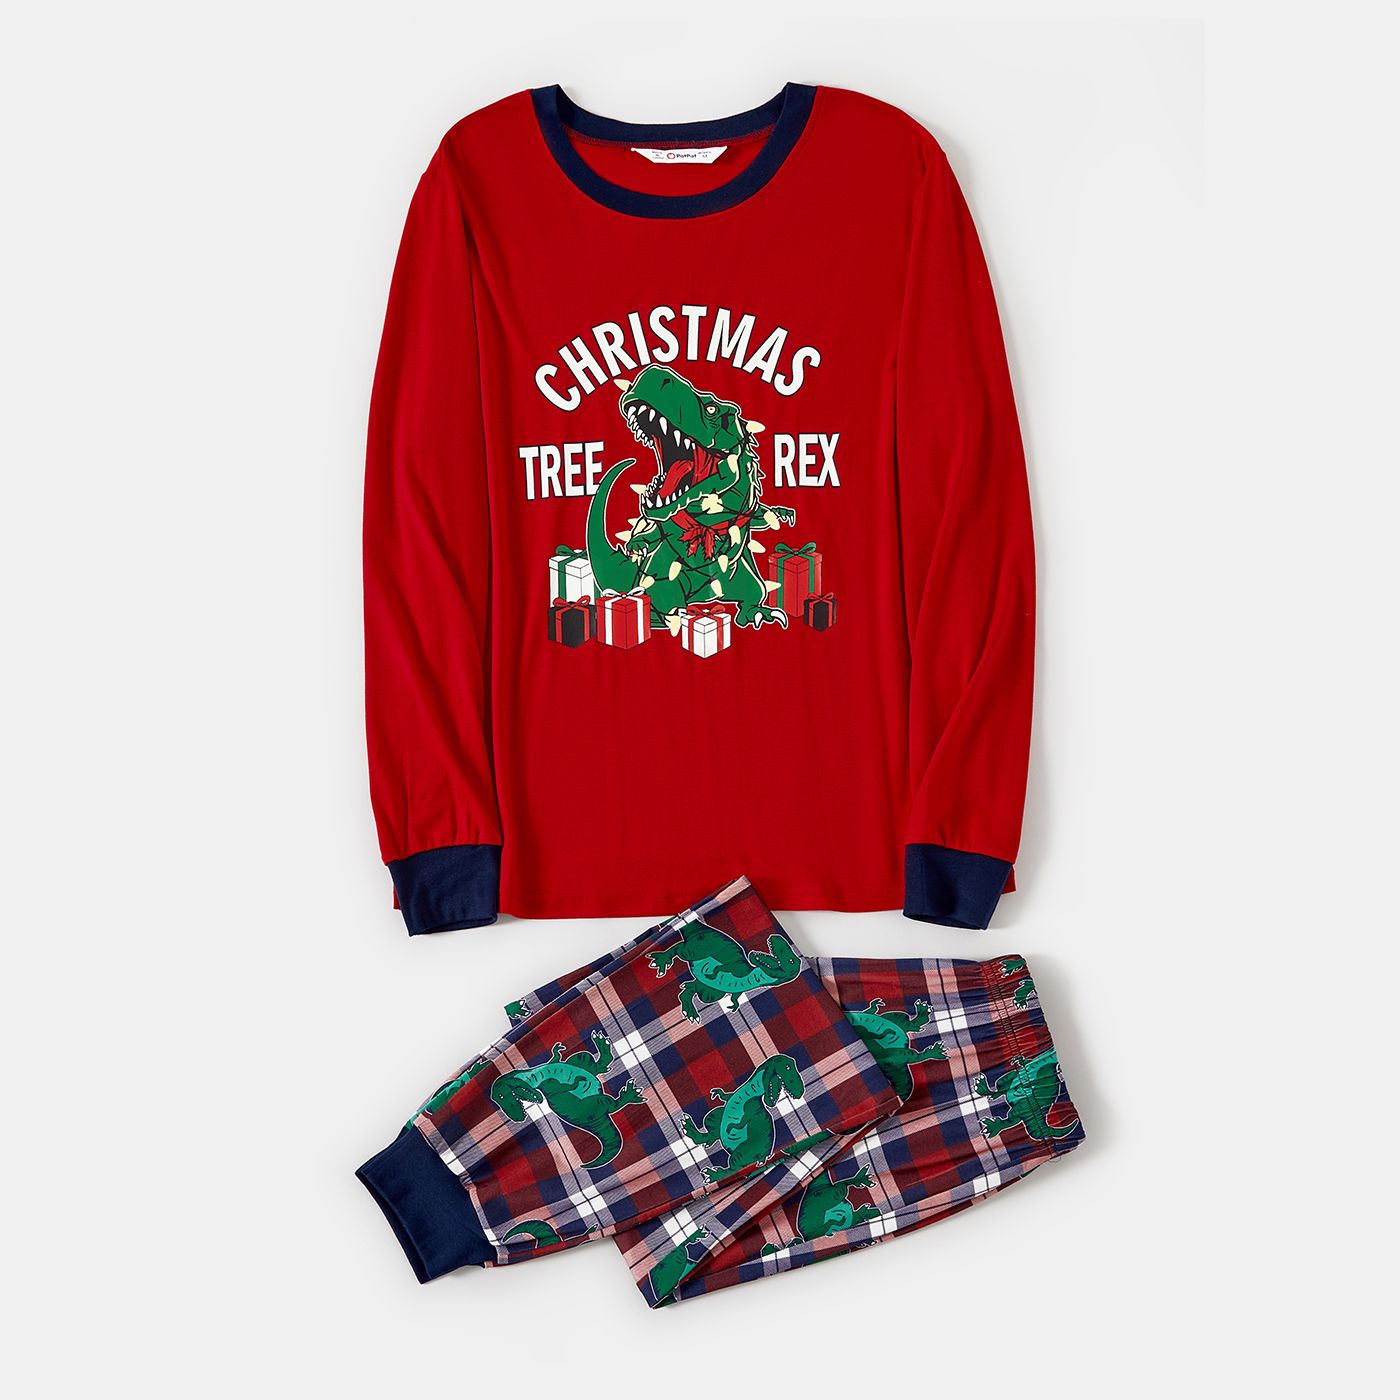 Christmas Glow In The Dark Family Matching Dinosaur Print Long-sleeve Pajamas Sets(Flame Resistant)